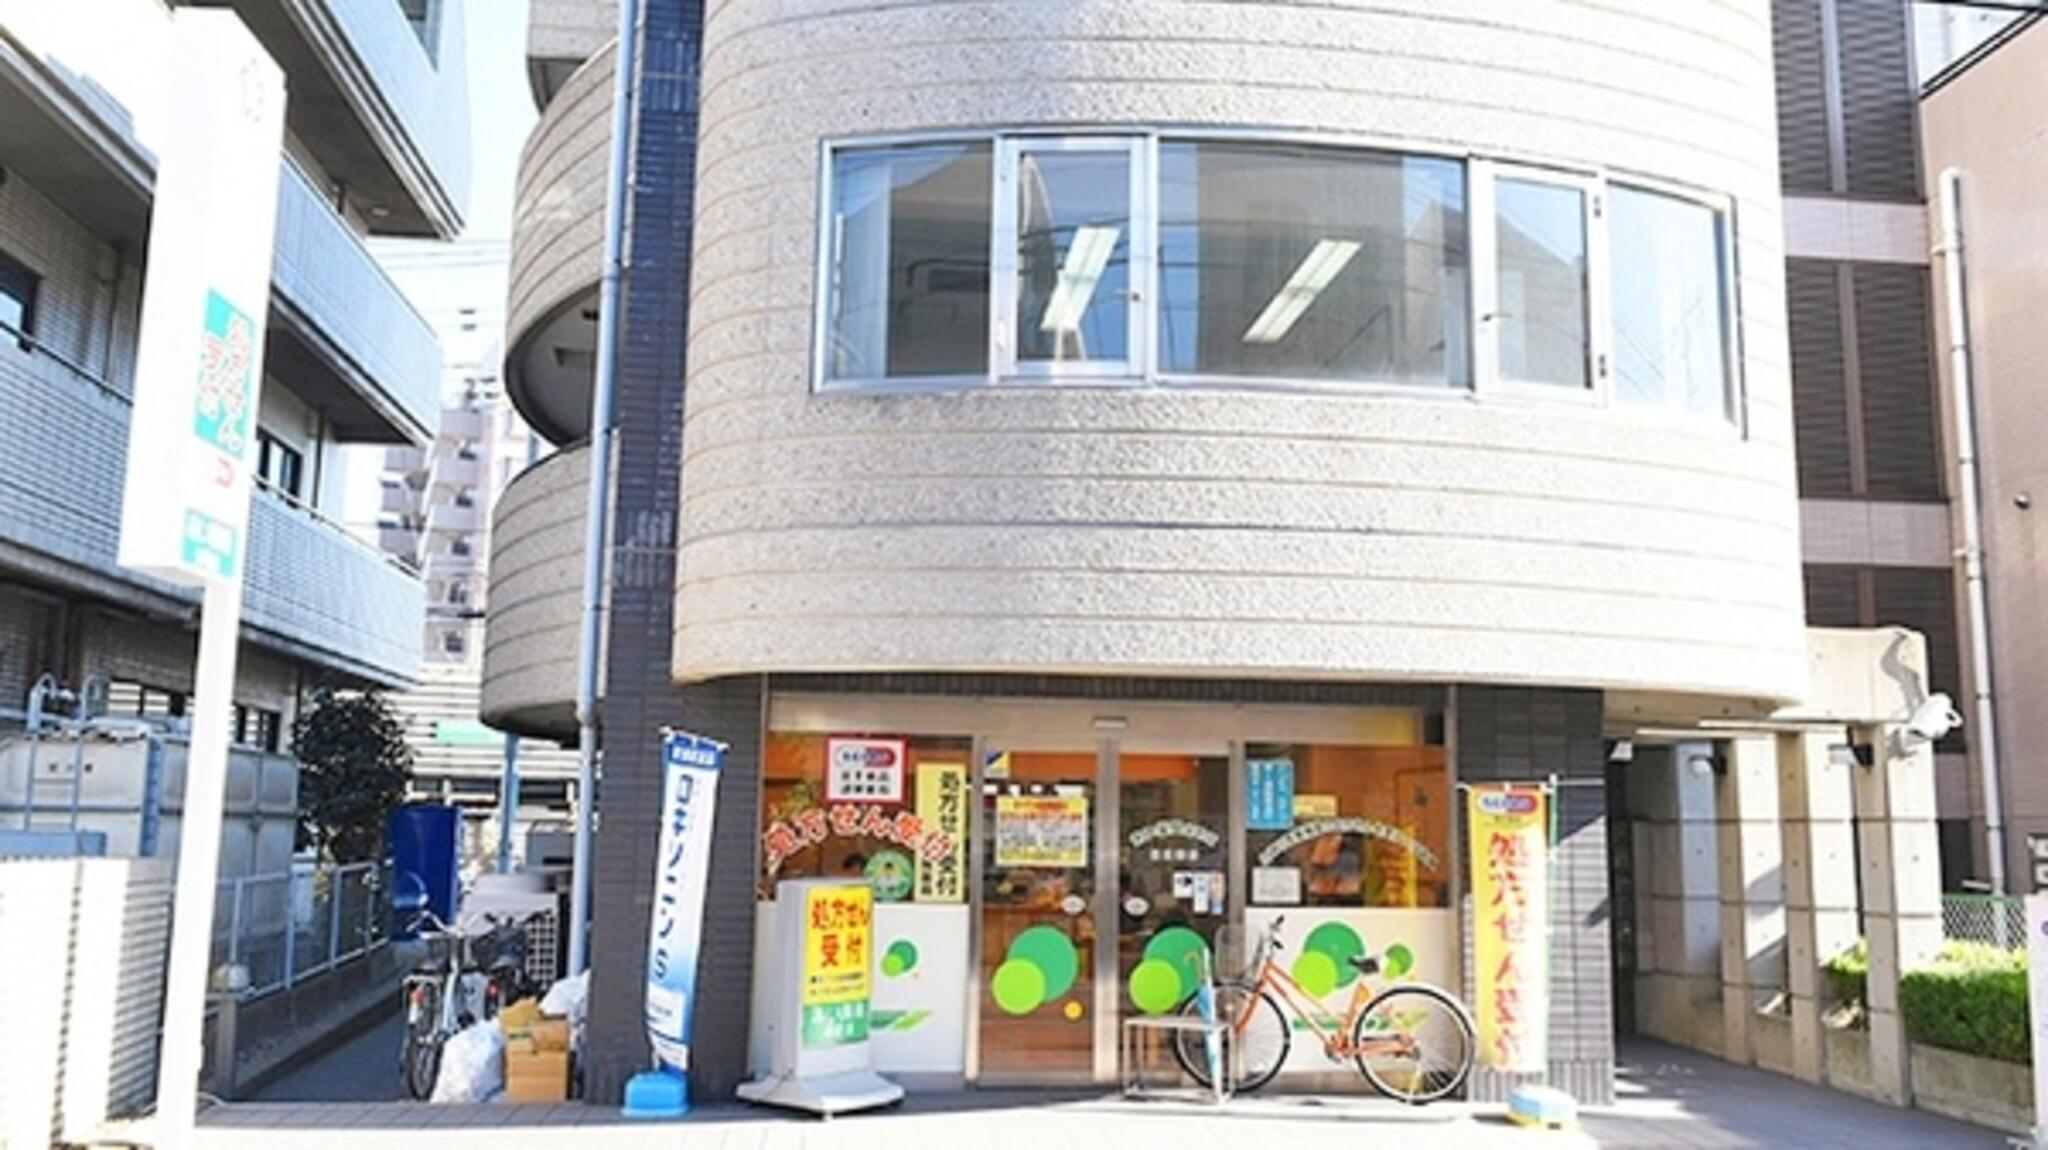 富士薬品 セイムス浦和駅西口薬局の代表写真1